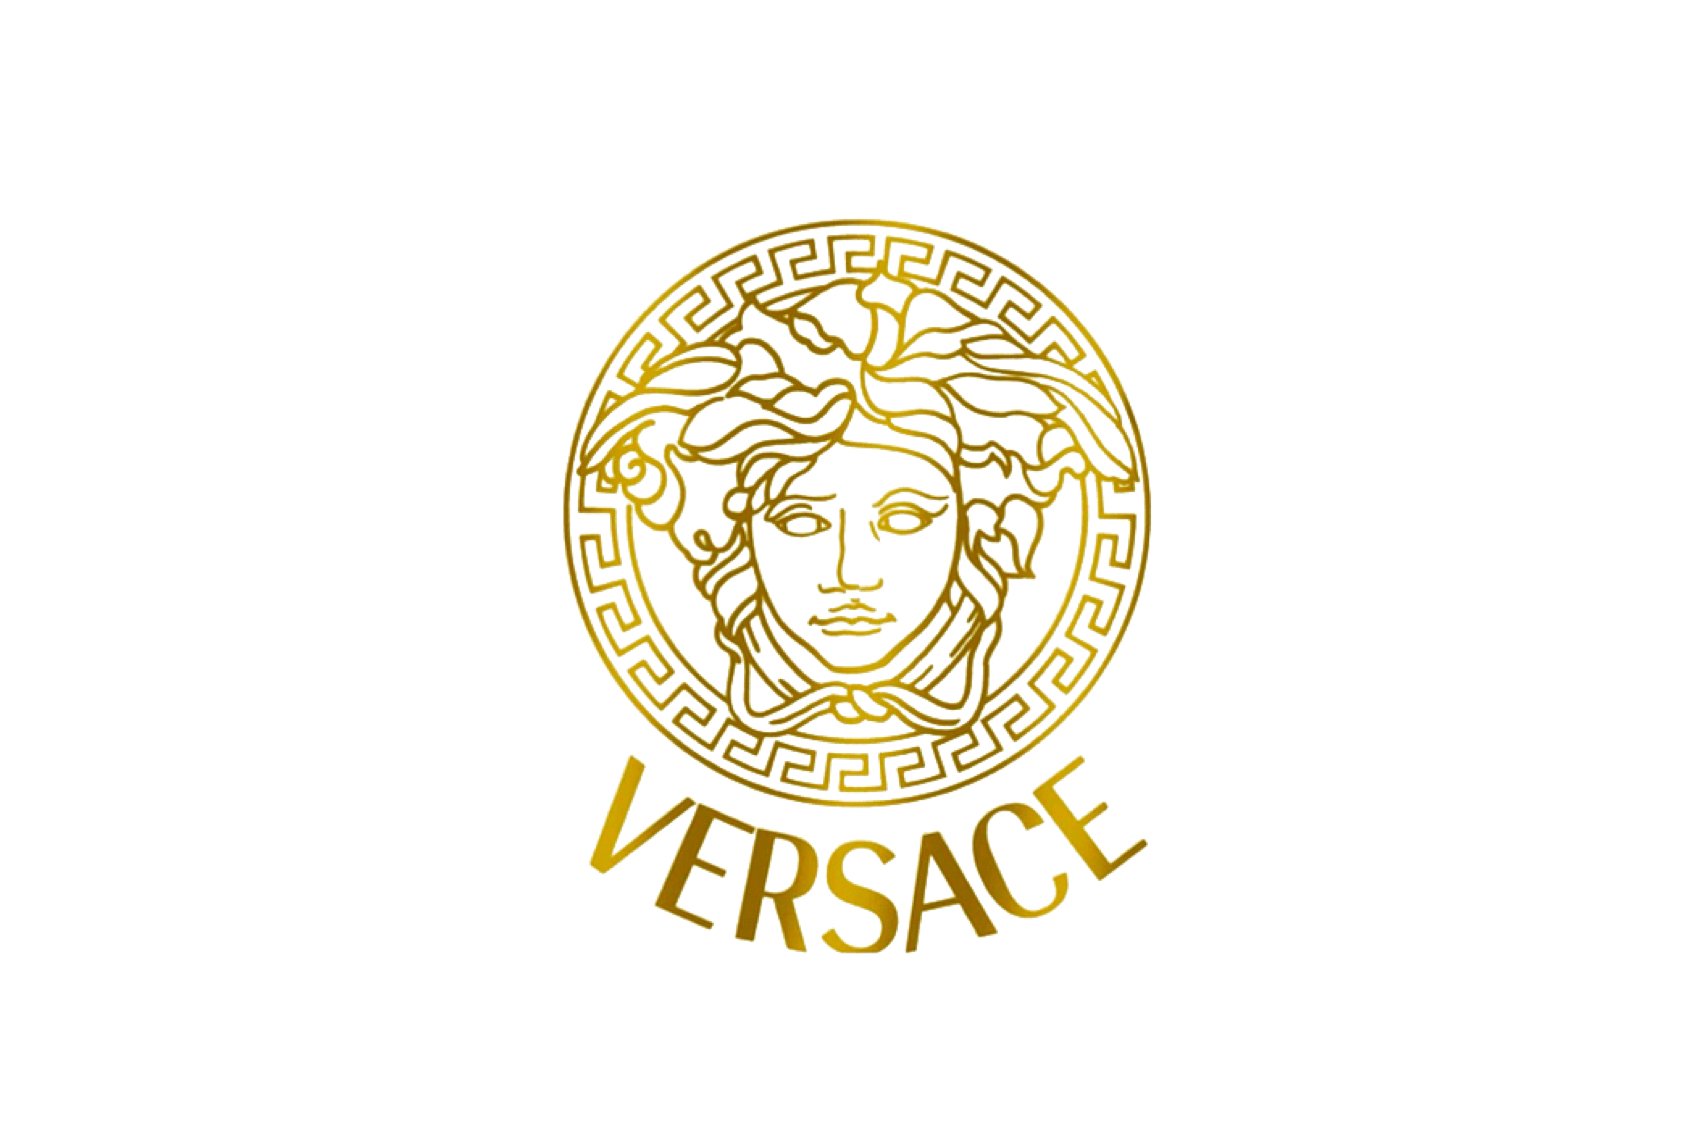 gold-logo-versace